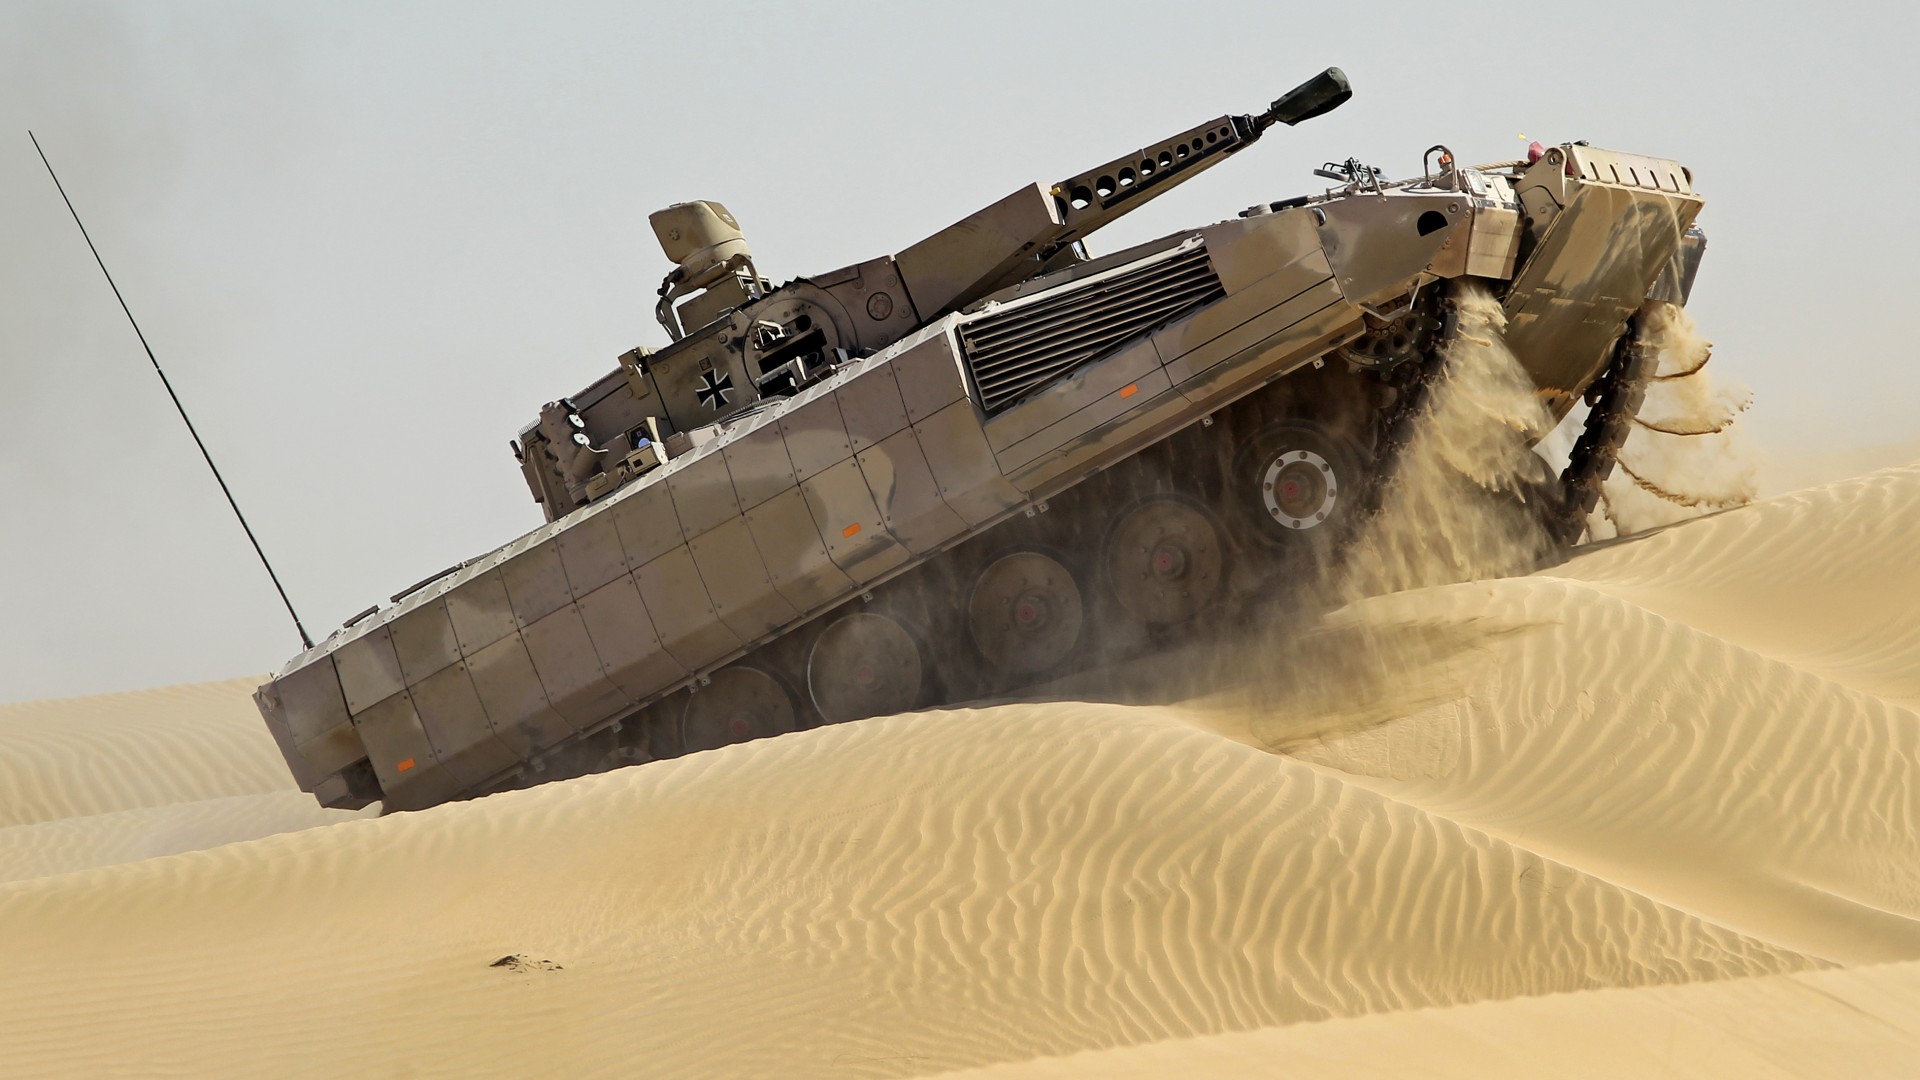 БМП, Пума, Бундесвер, песок, пустыня, Pume, IFV, Bundeswehr, infantry fighting vehicle, sand, desert (horizontal)